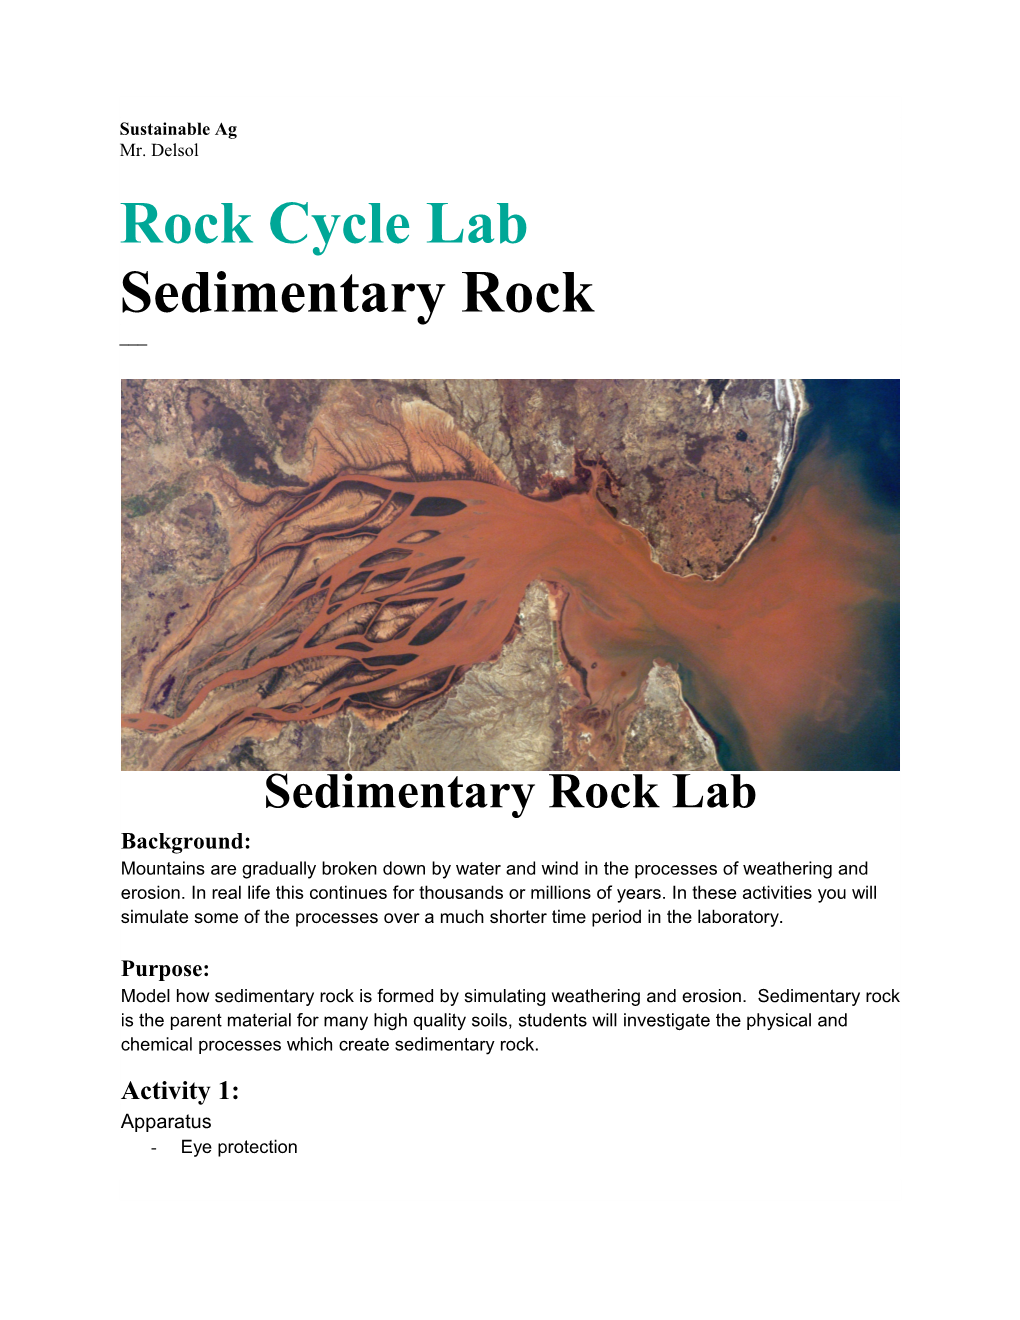 Sedimentary Rock Lab